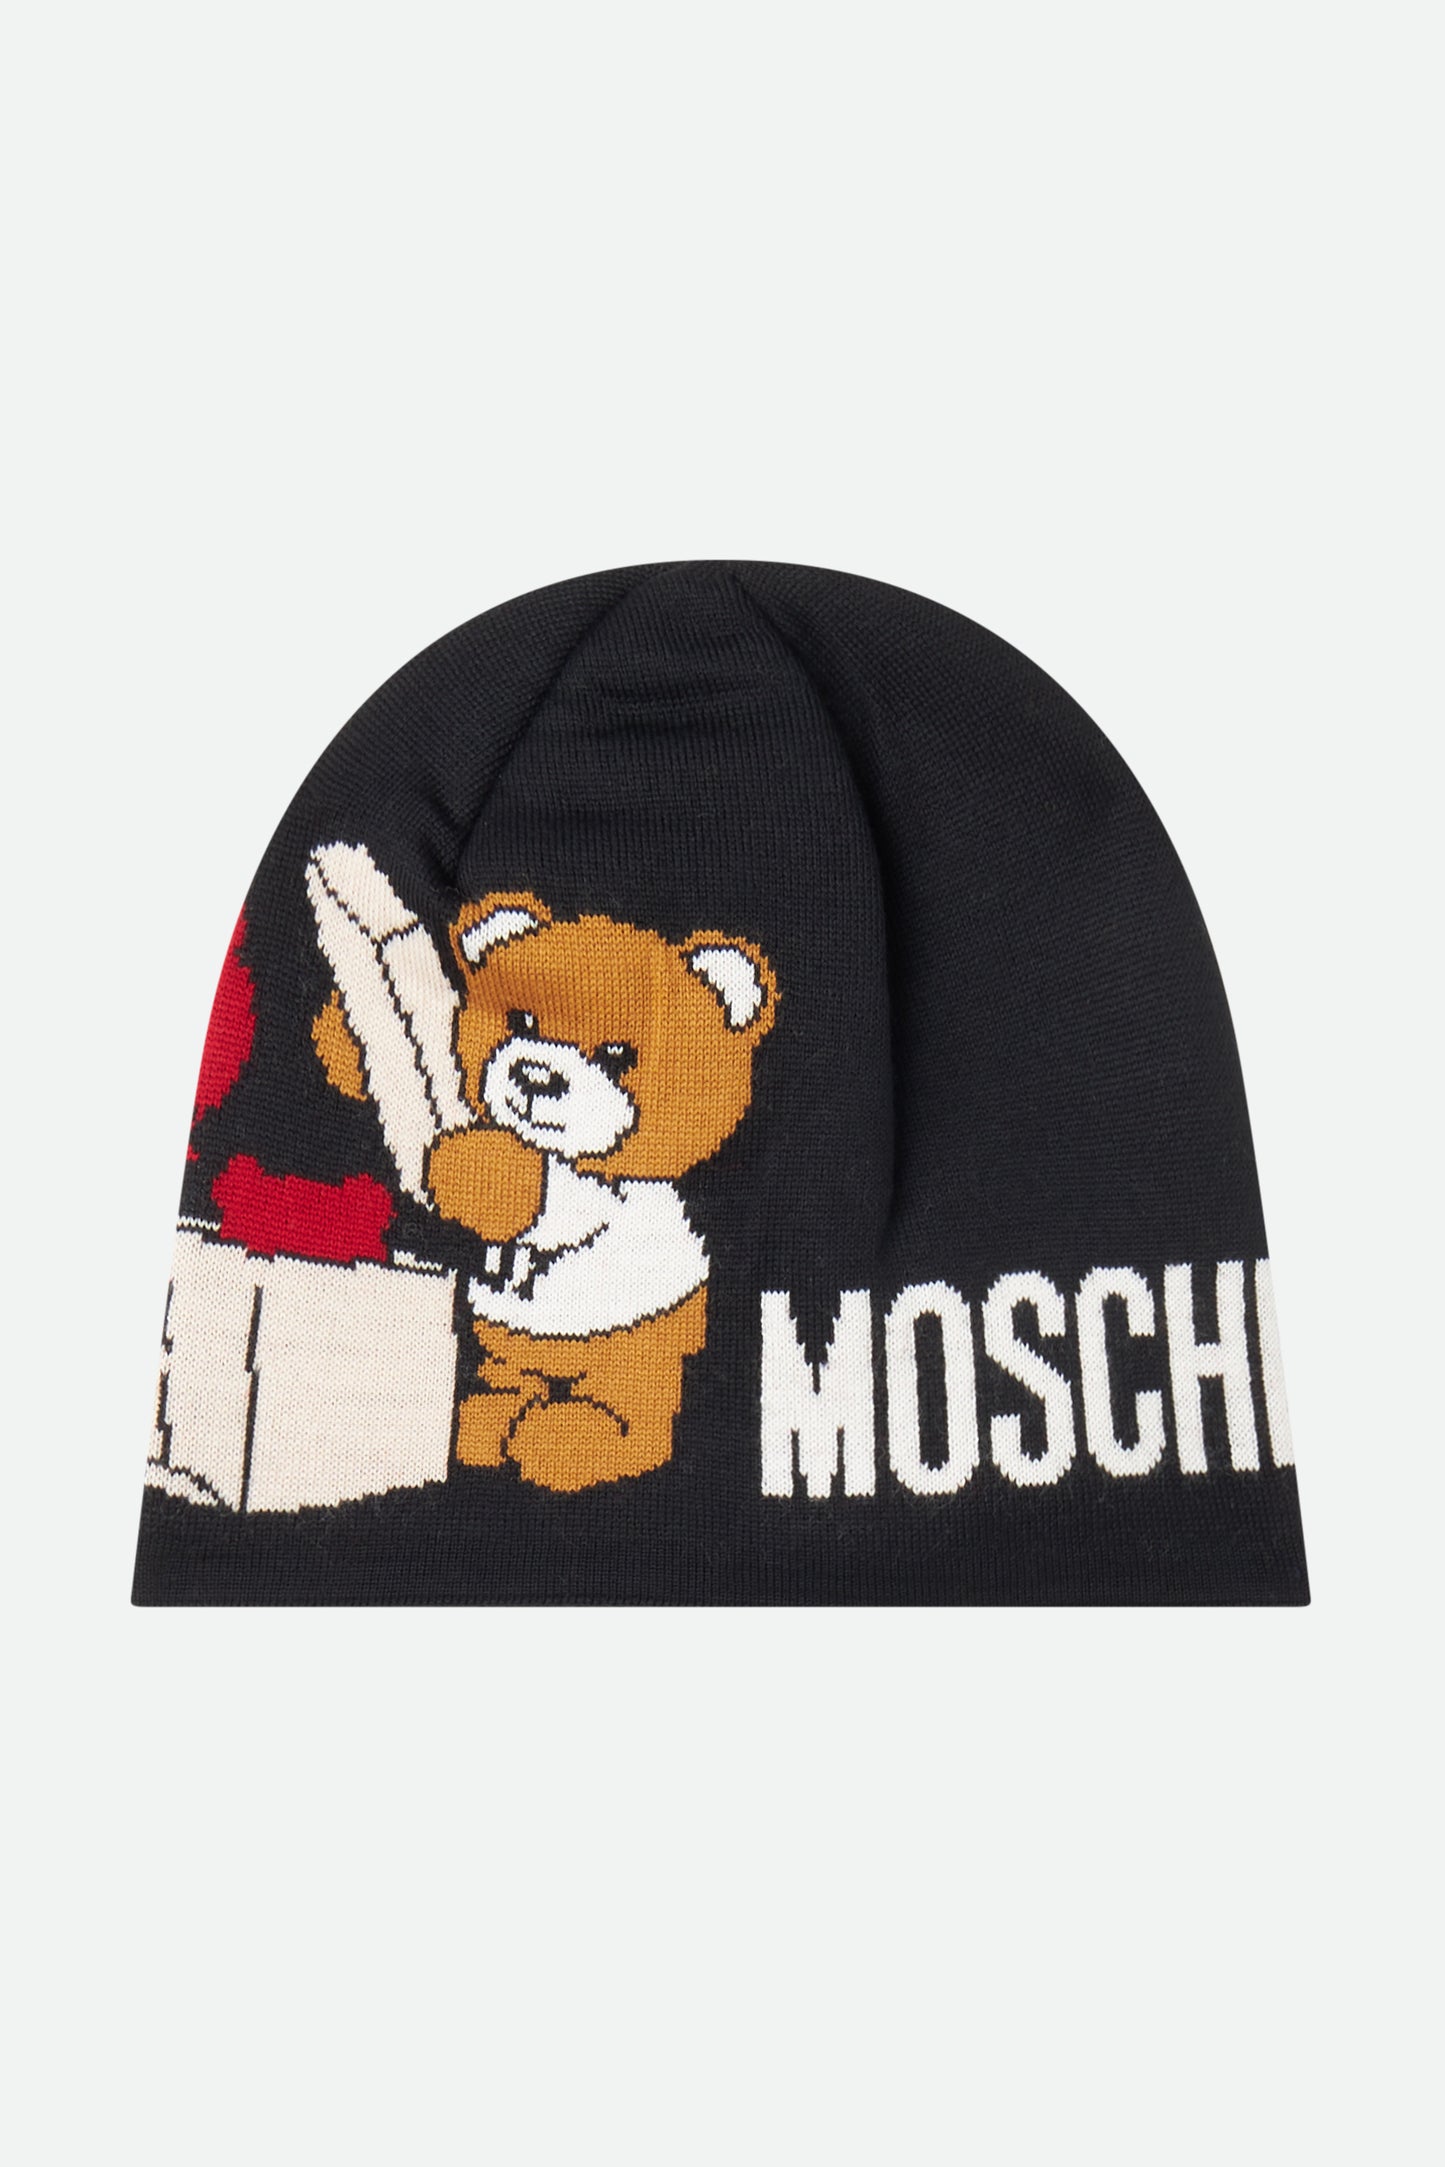 Moschino Black Wool Hat